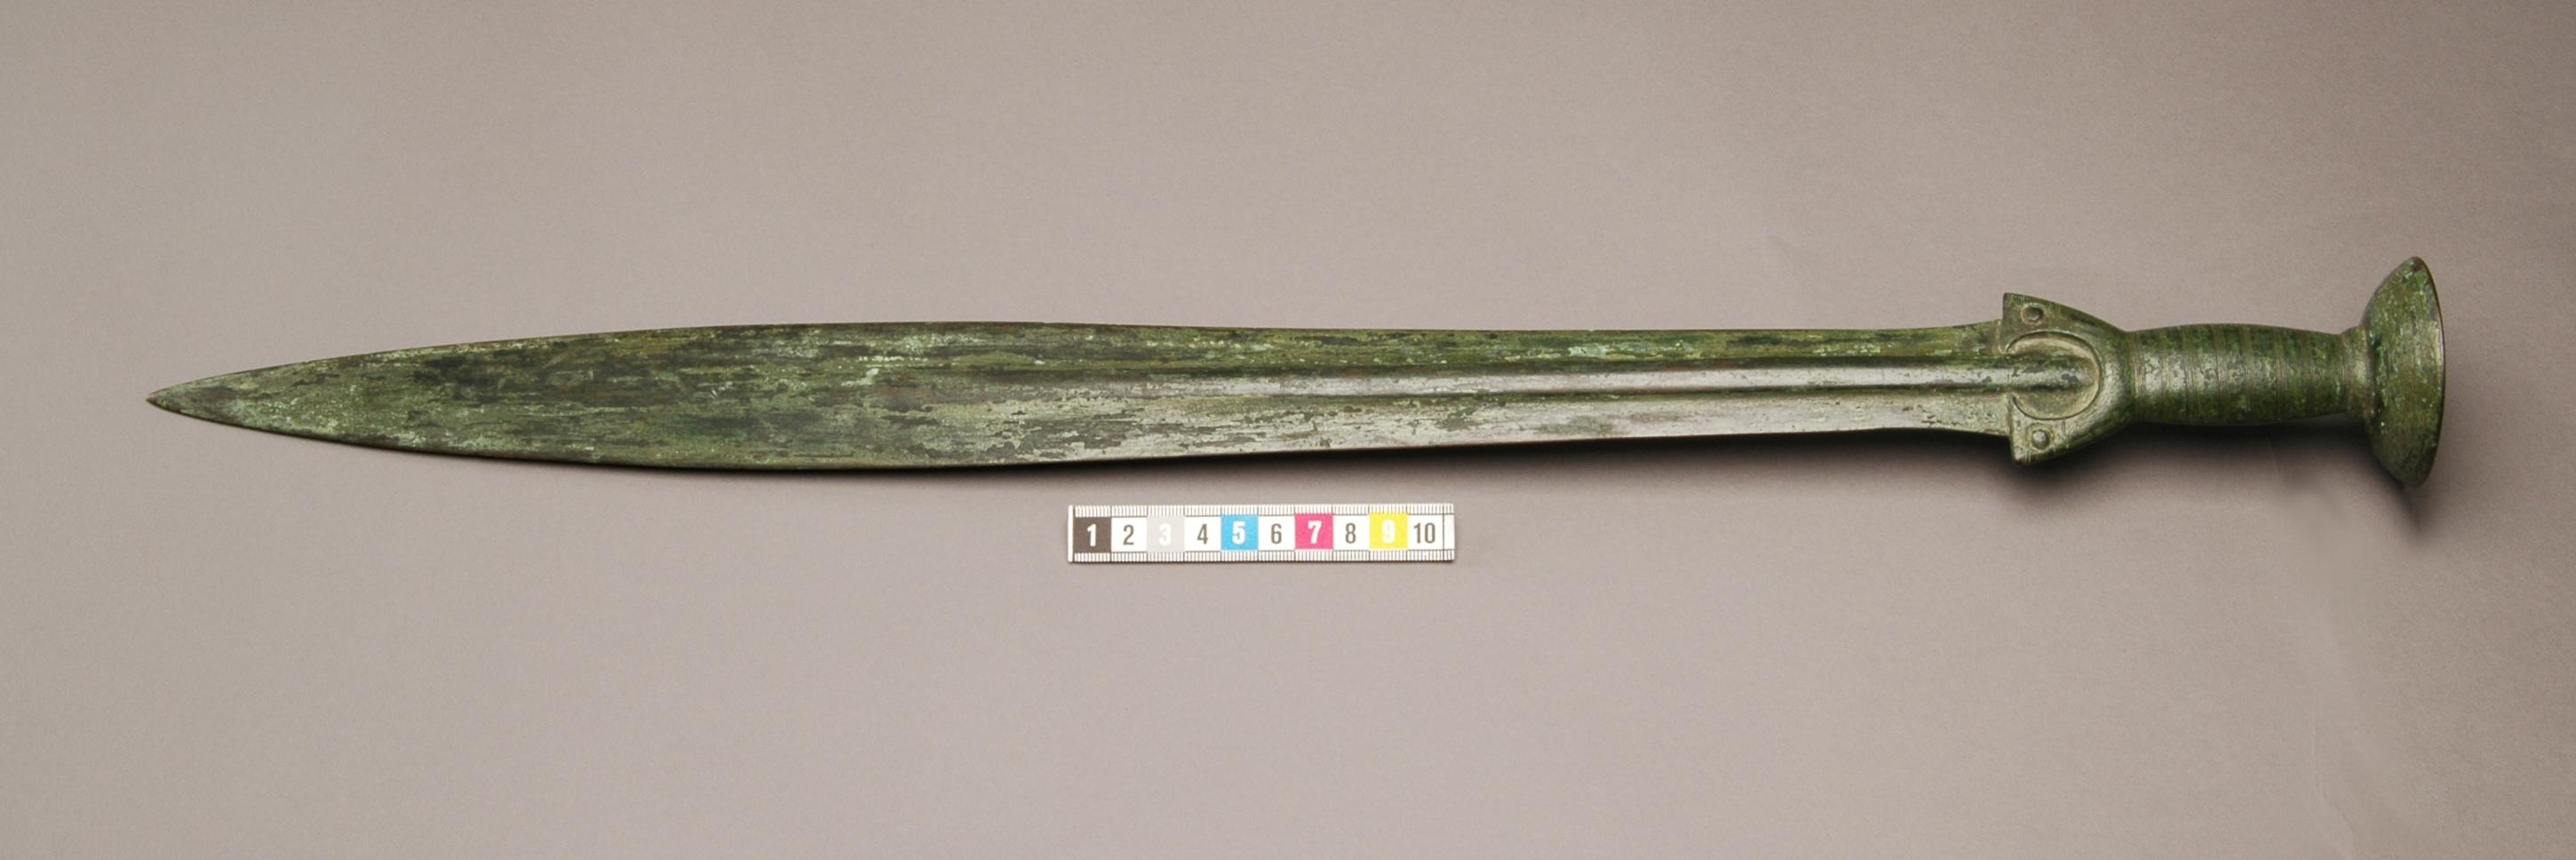 sword-from-the-bronze-age-sweden-1100-bce-900-bce-swedish-v0-n8ad3ybw5fba1.jpg